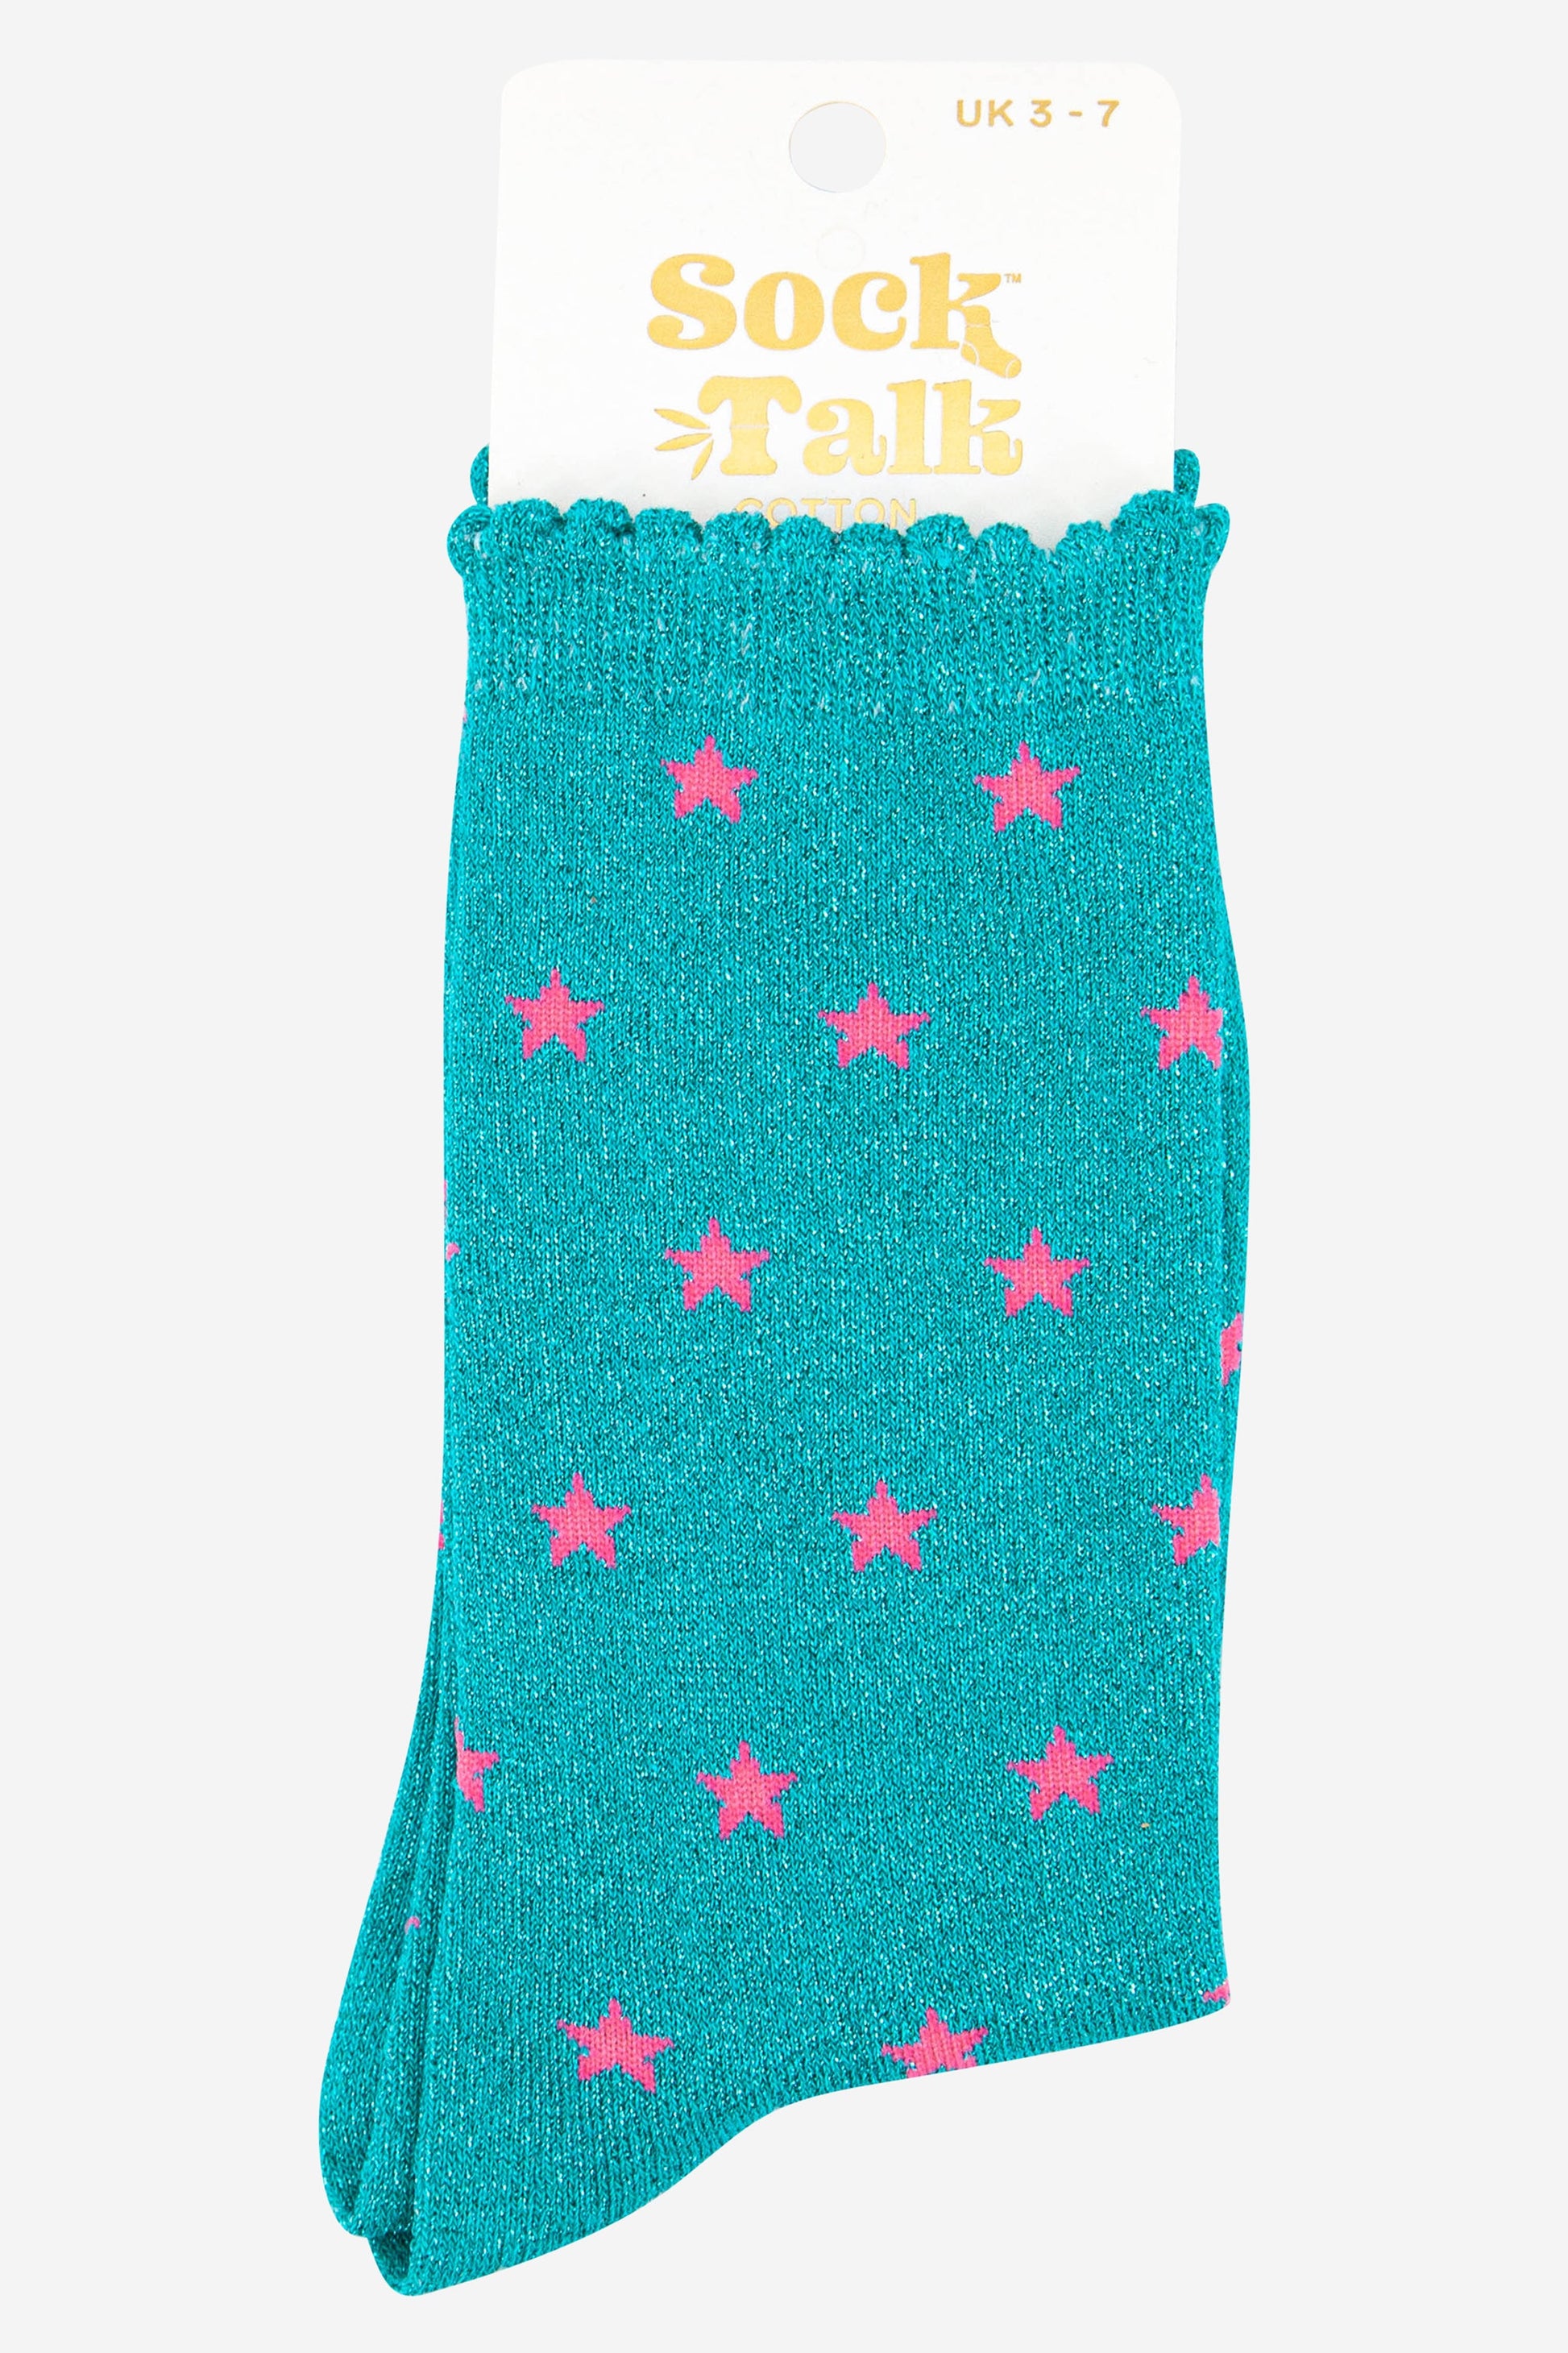 blue glitter ankle socks with pink stars uk size 3-7